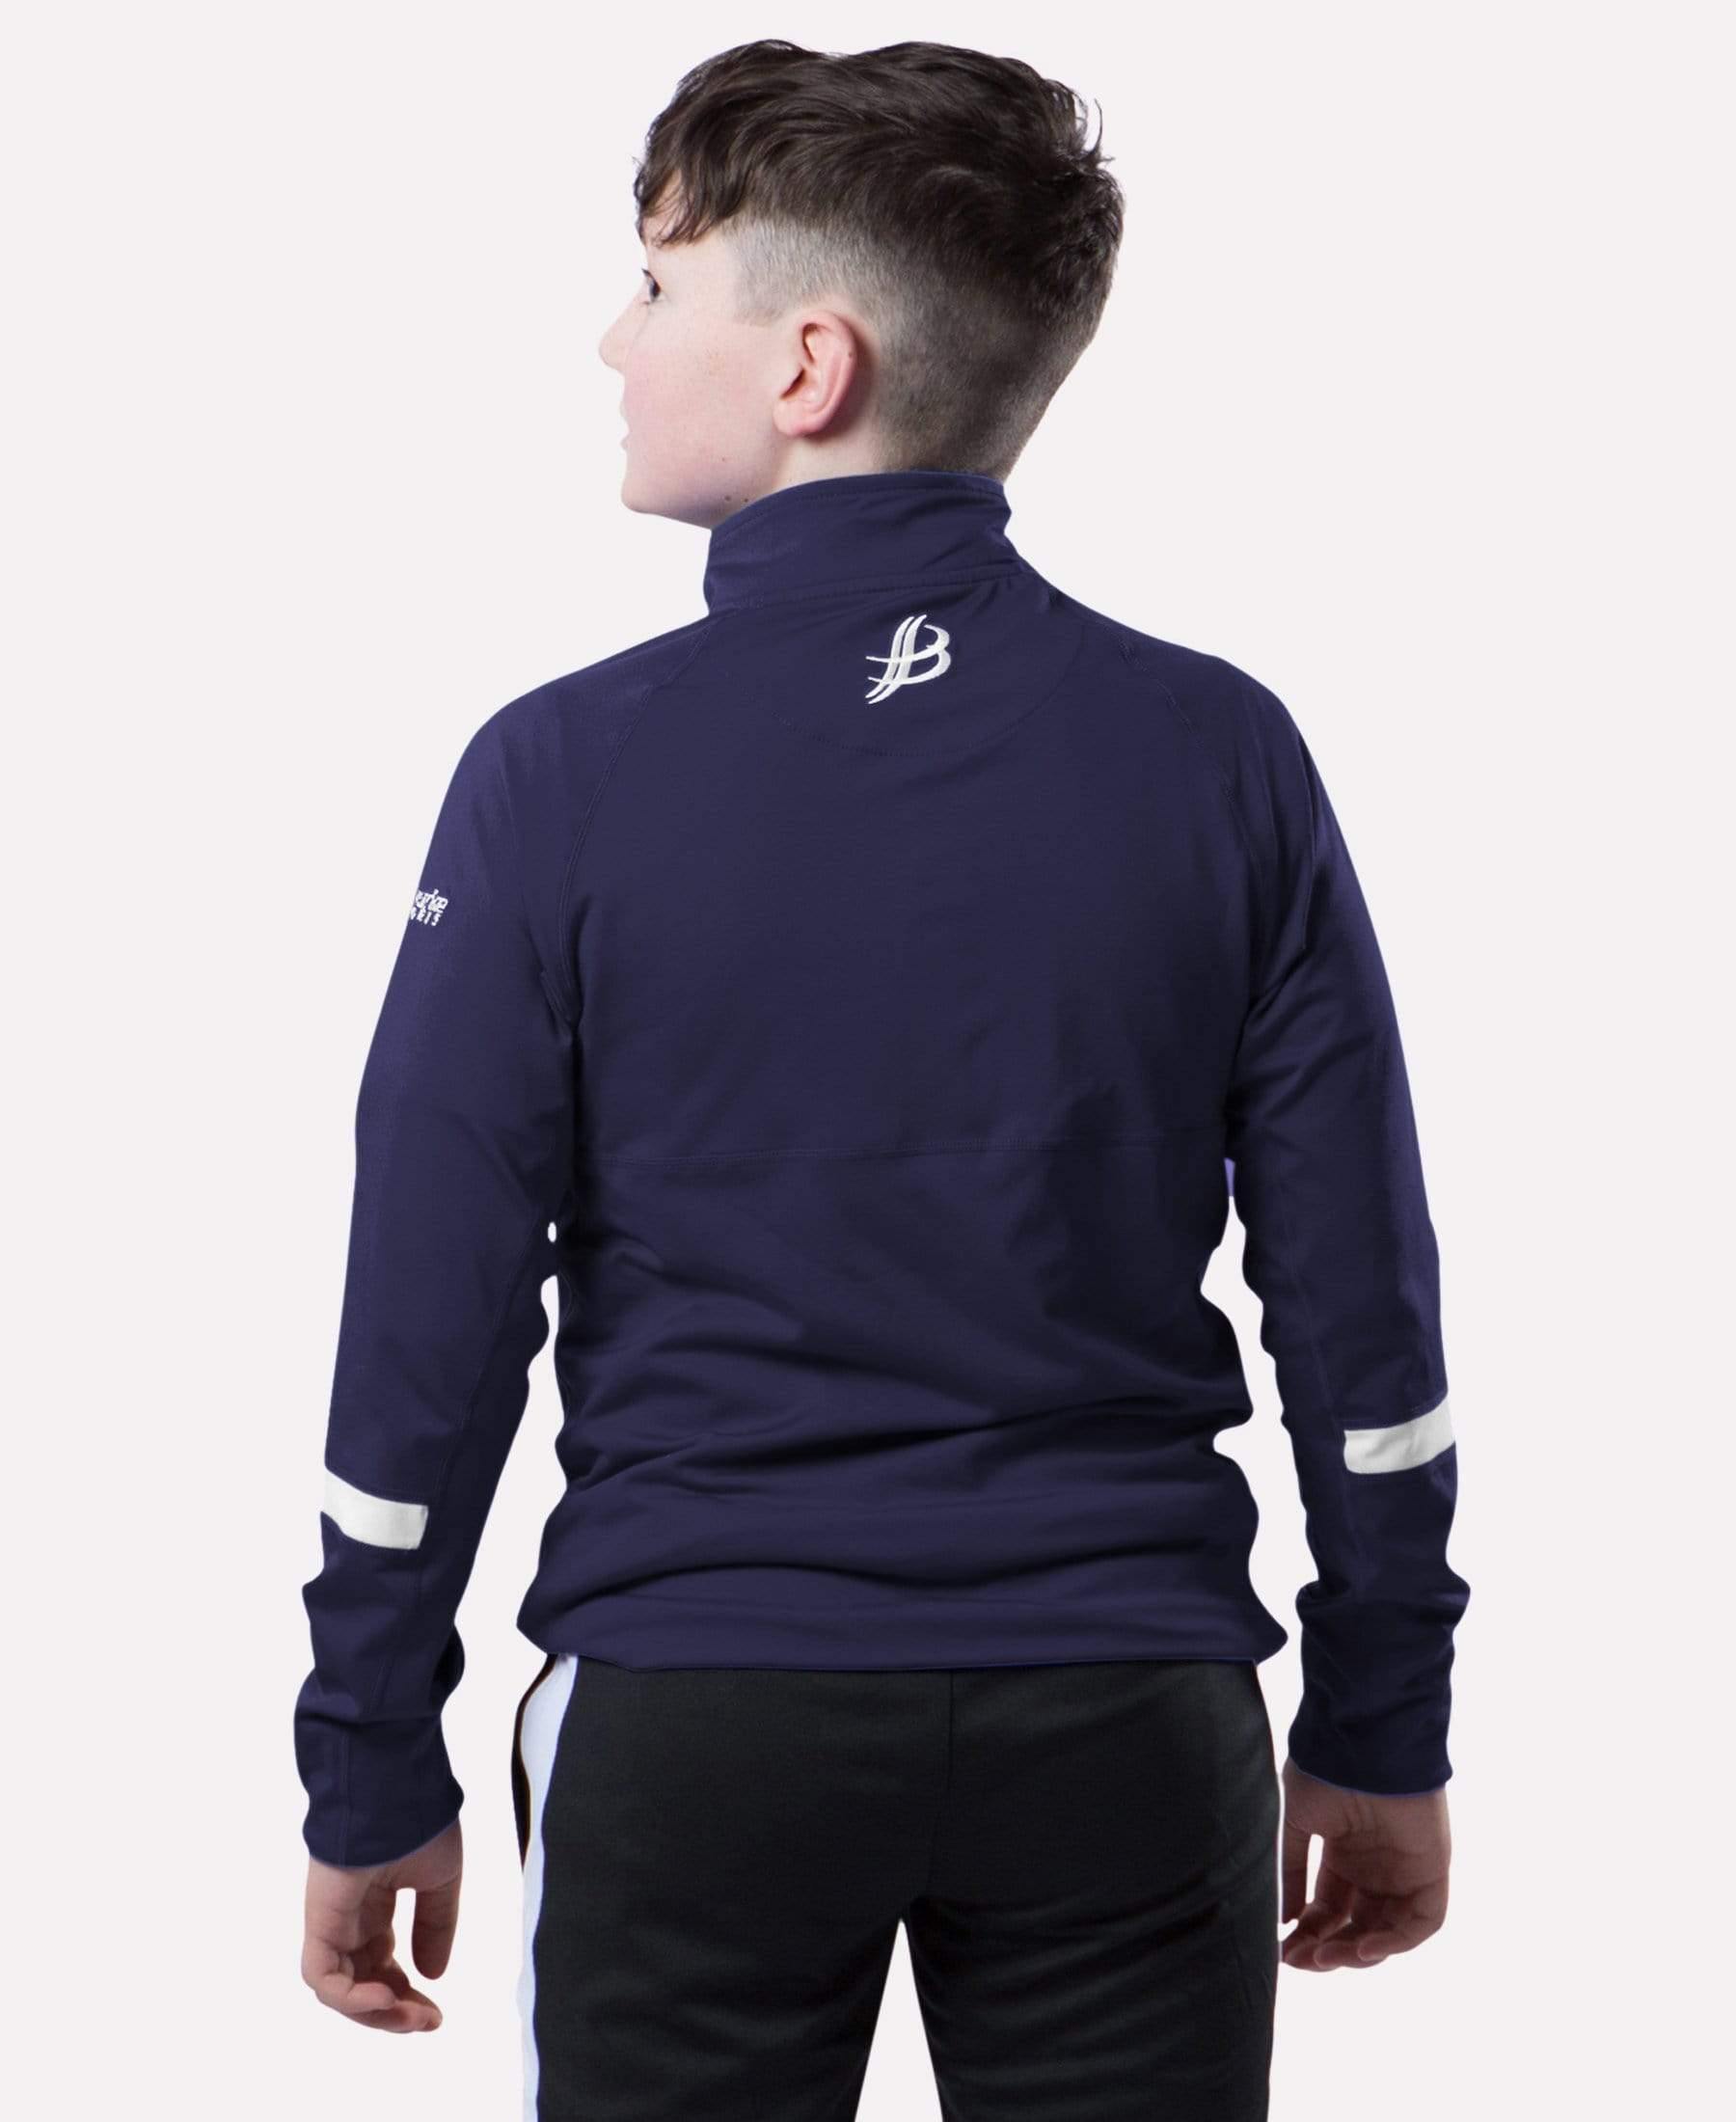 ALPHA Kids Full Zip (Navy/White) - Bourke Sports Limited